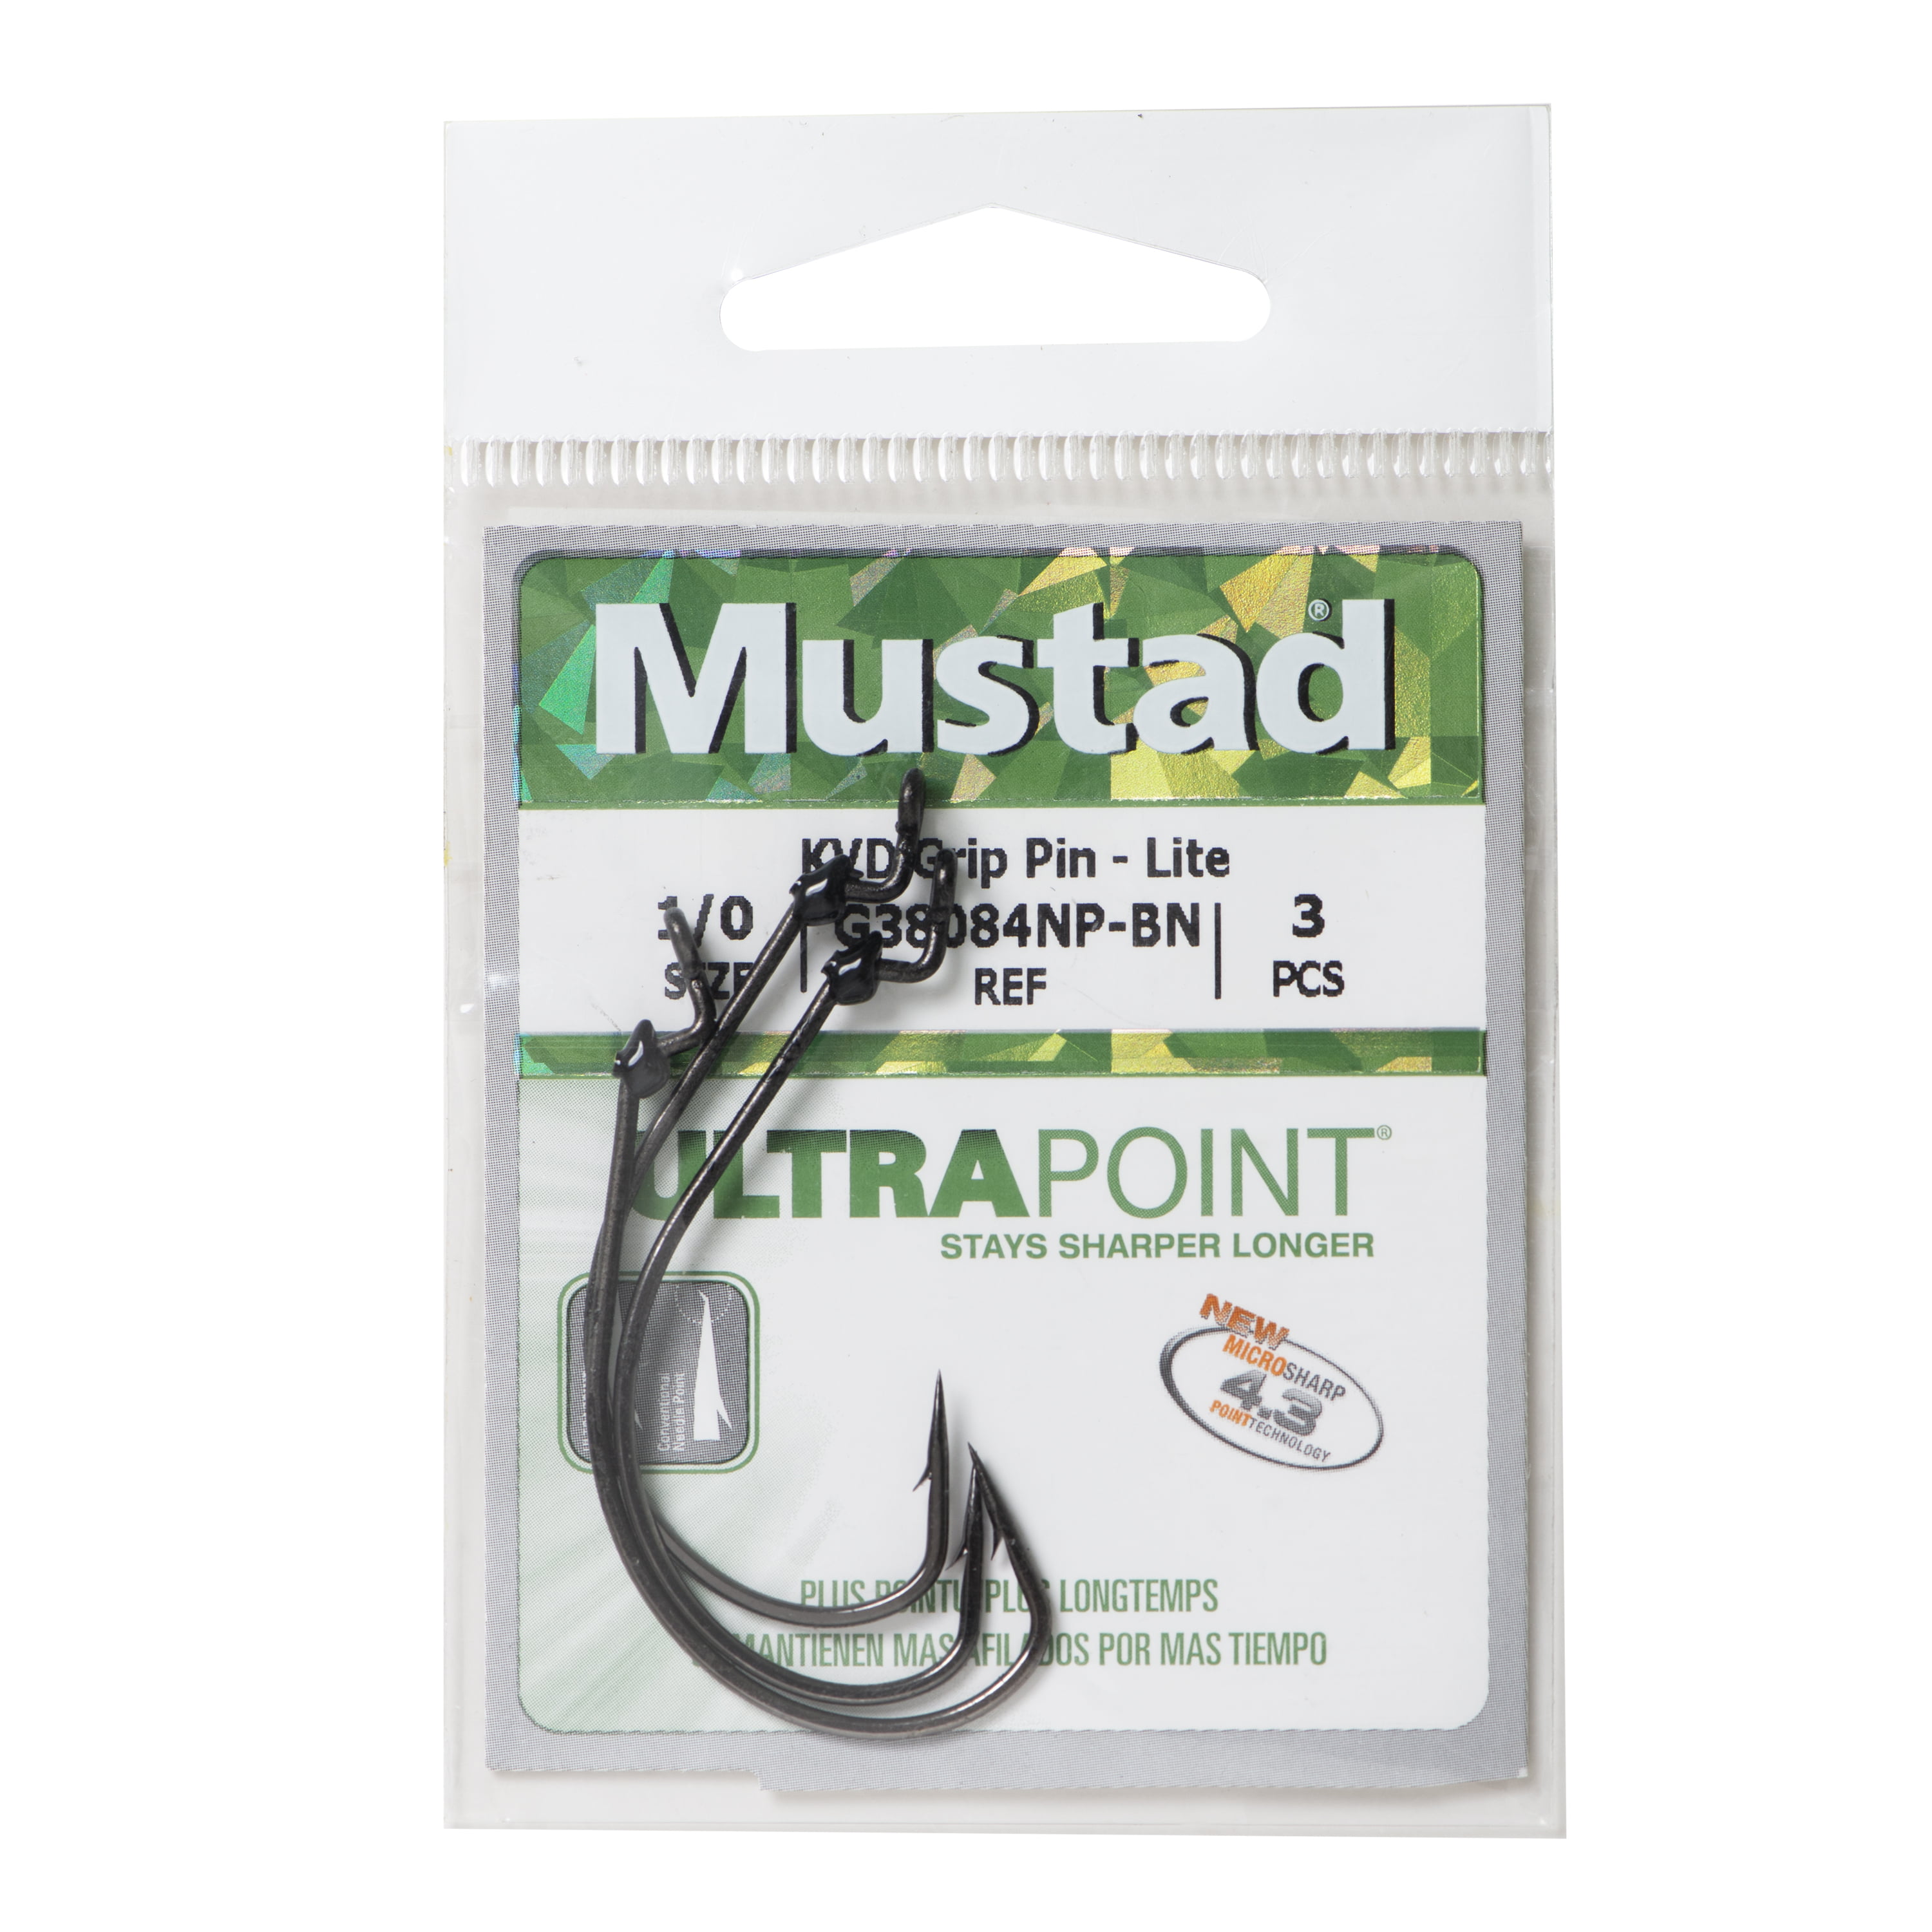 Mustad KVD Grip Pin Lite Hook - Size: 3/0 (Black Nickel) 3pc